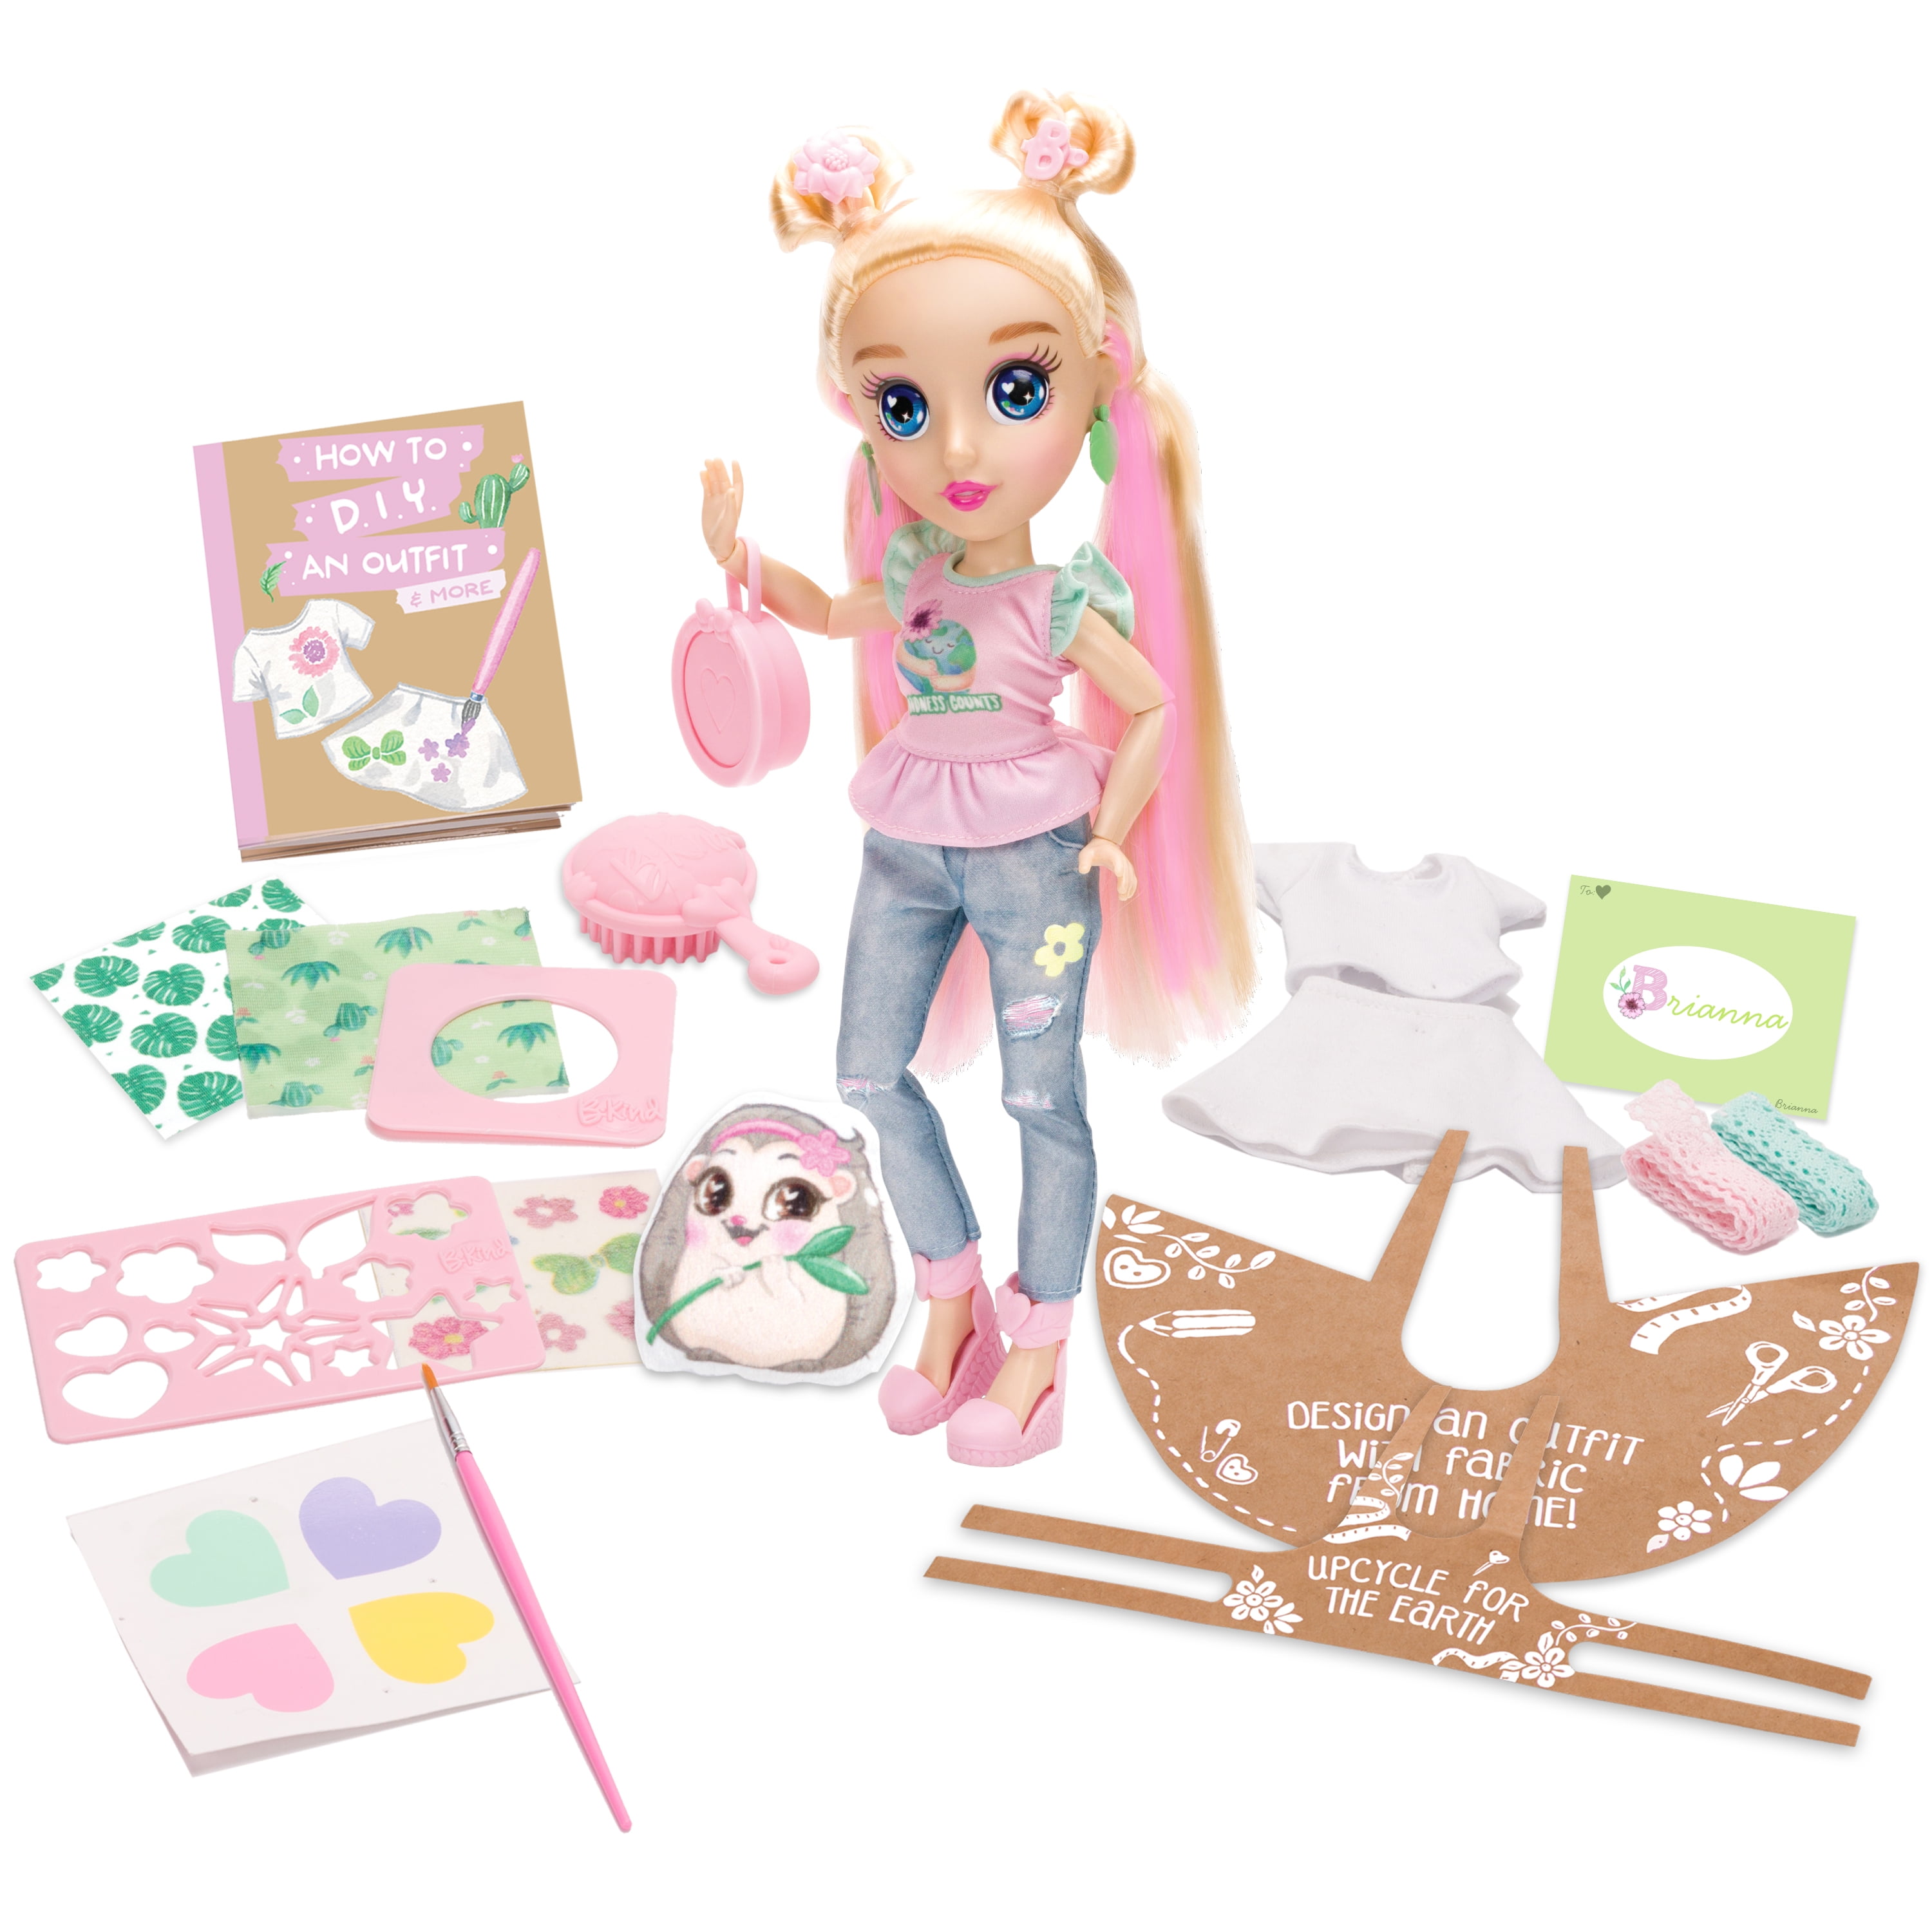 Kids Play American Girl Crafts Daisy Design Bracelets Kit Toy Gift Childrens Ne 